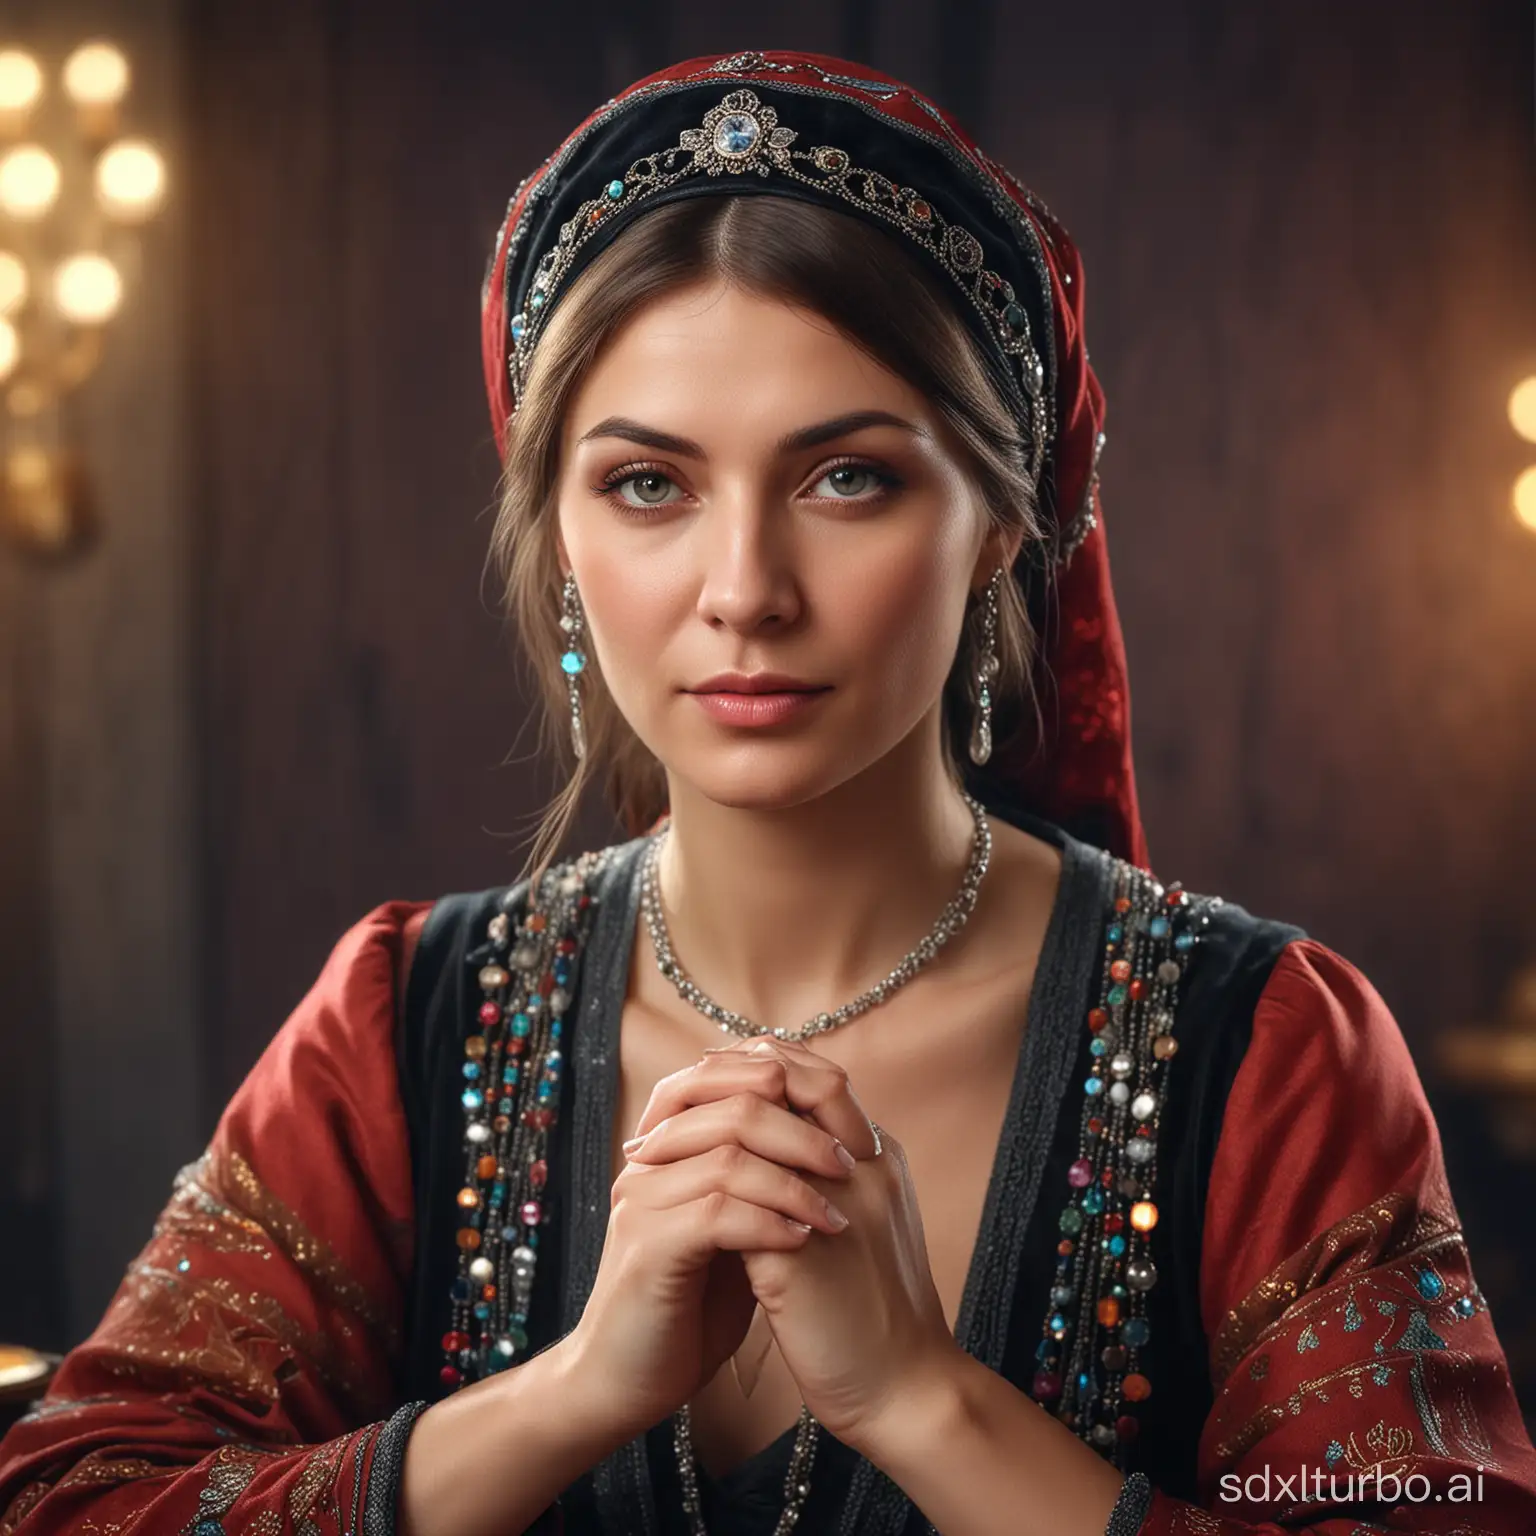 A portrait of a Russian fortune-teller woman. Photorealistic, portrait, 1:1, bokeh, details, ultra high quality, no fingers